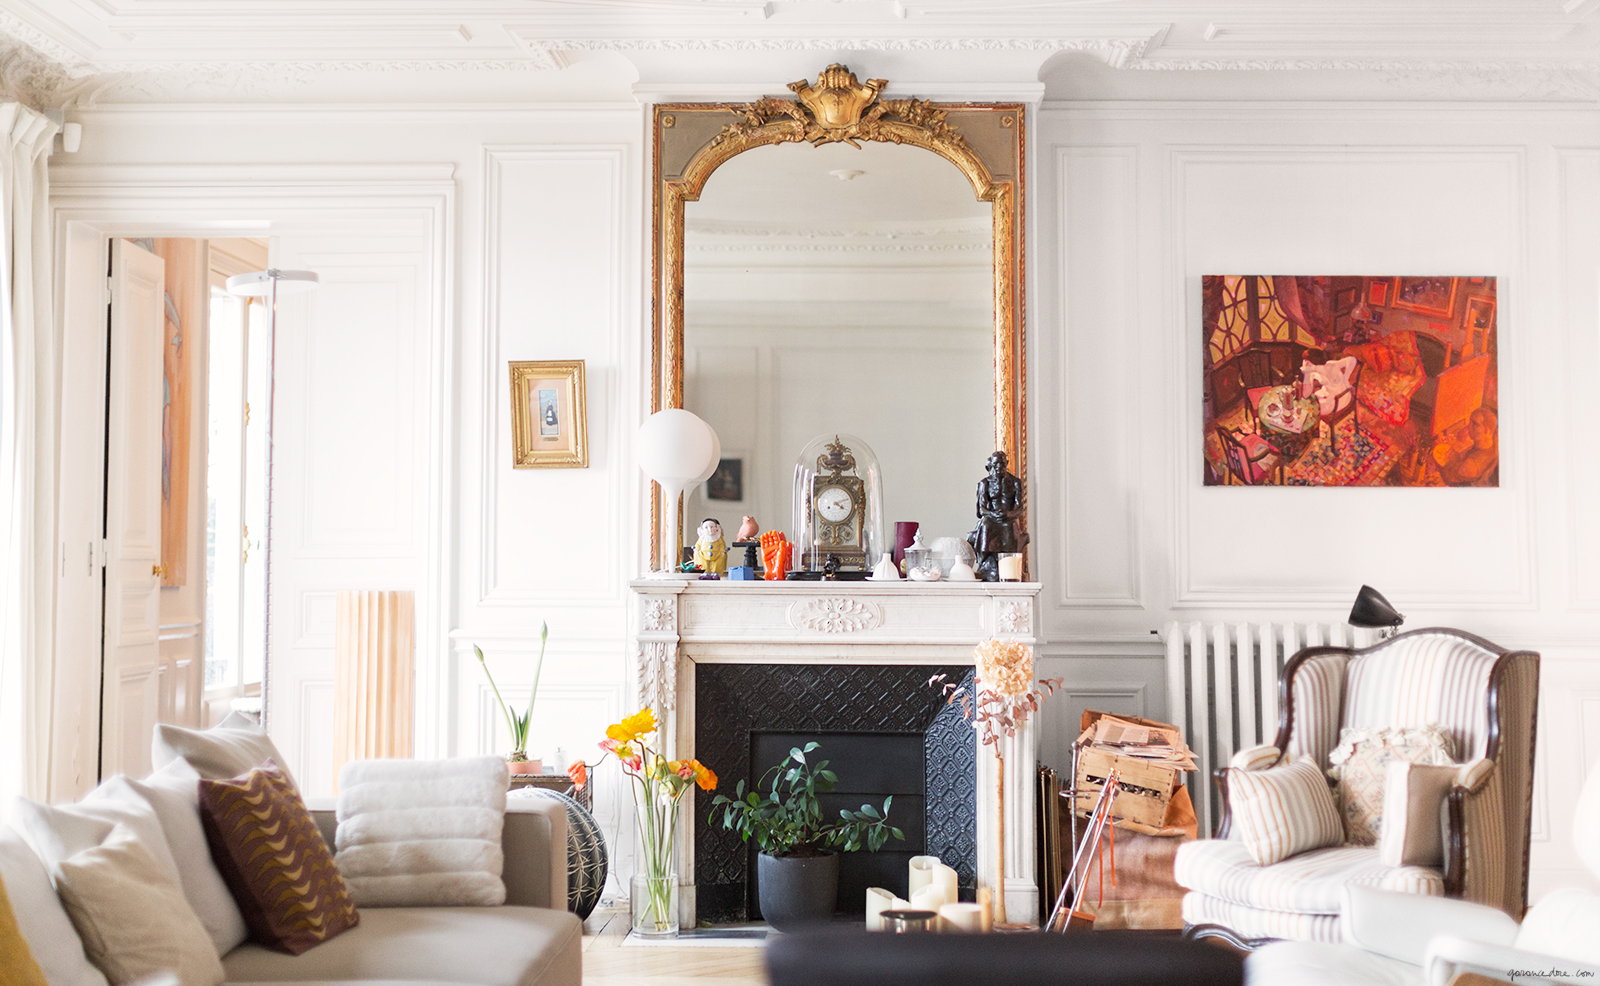 A True Home: Edwina’s Charming Interior